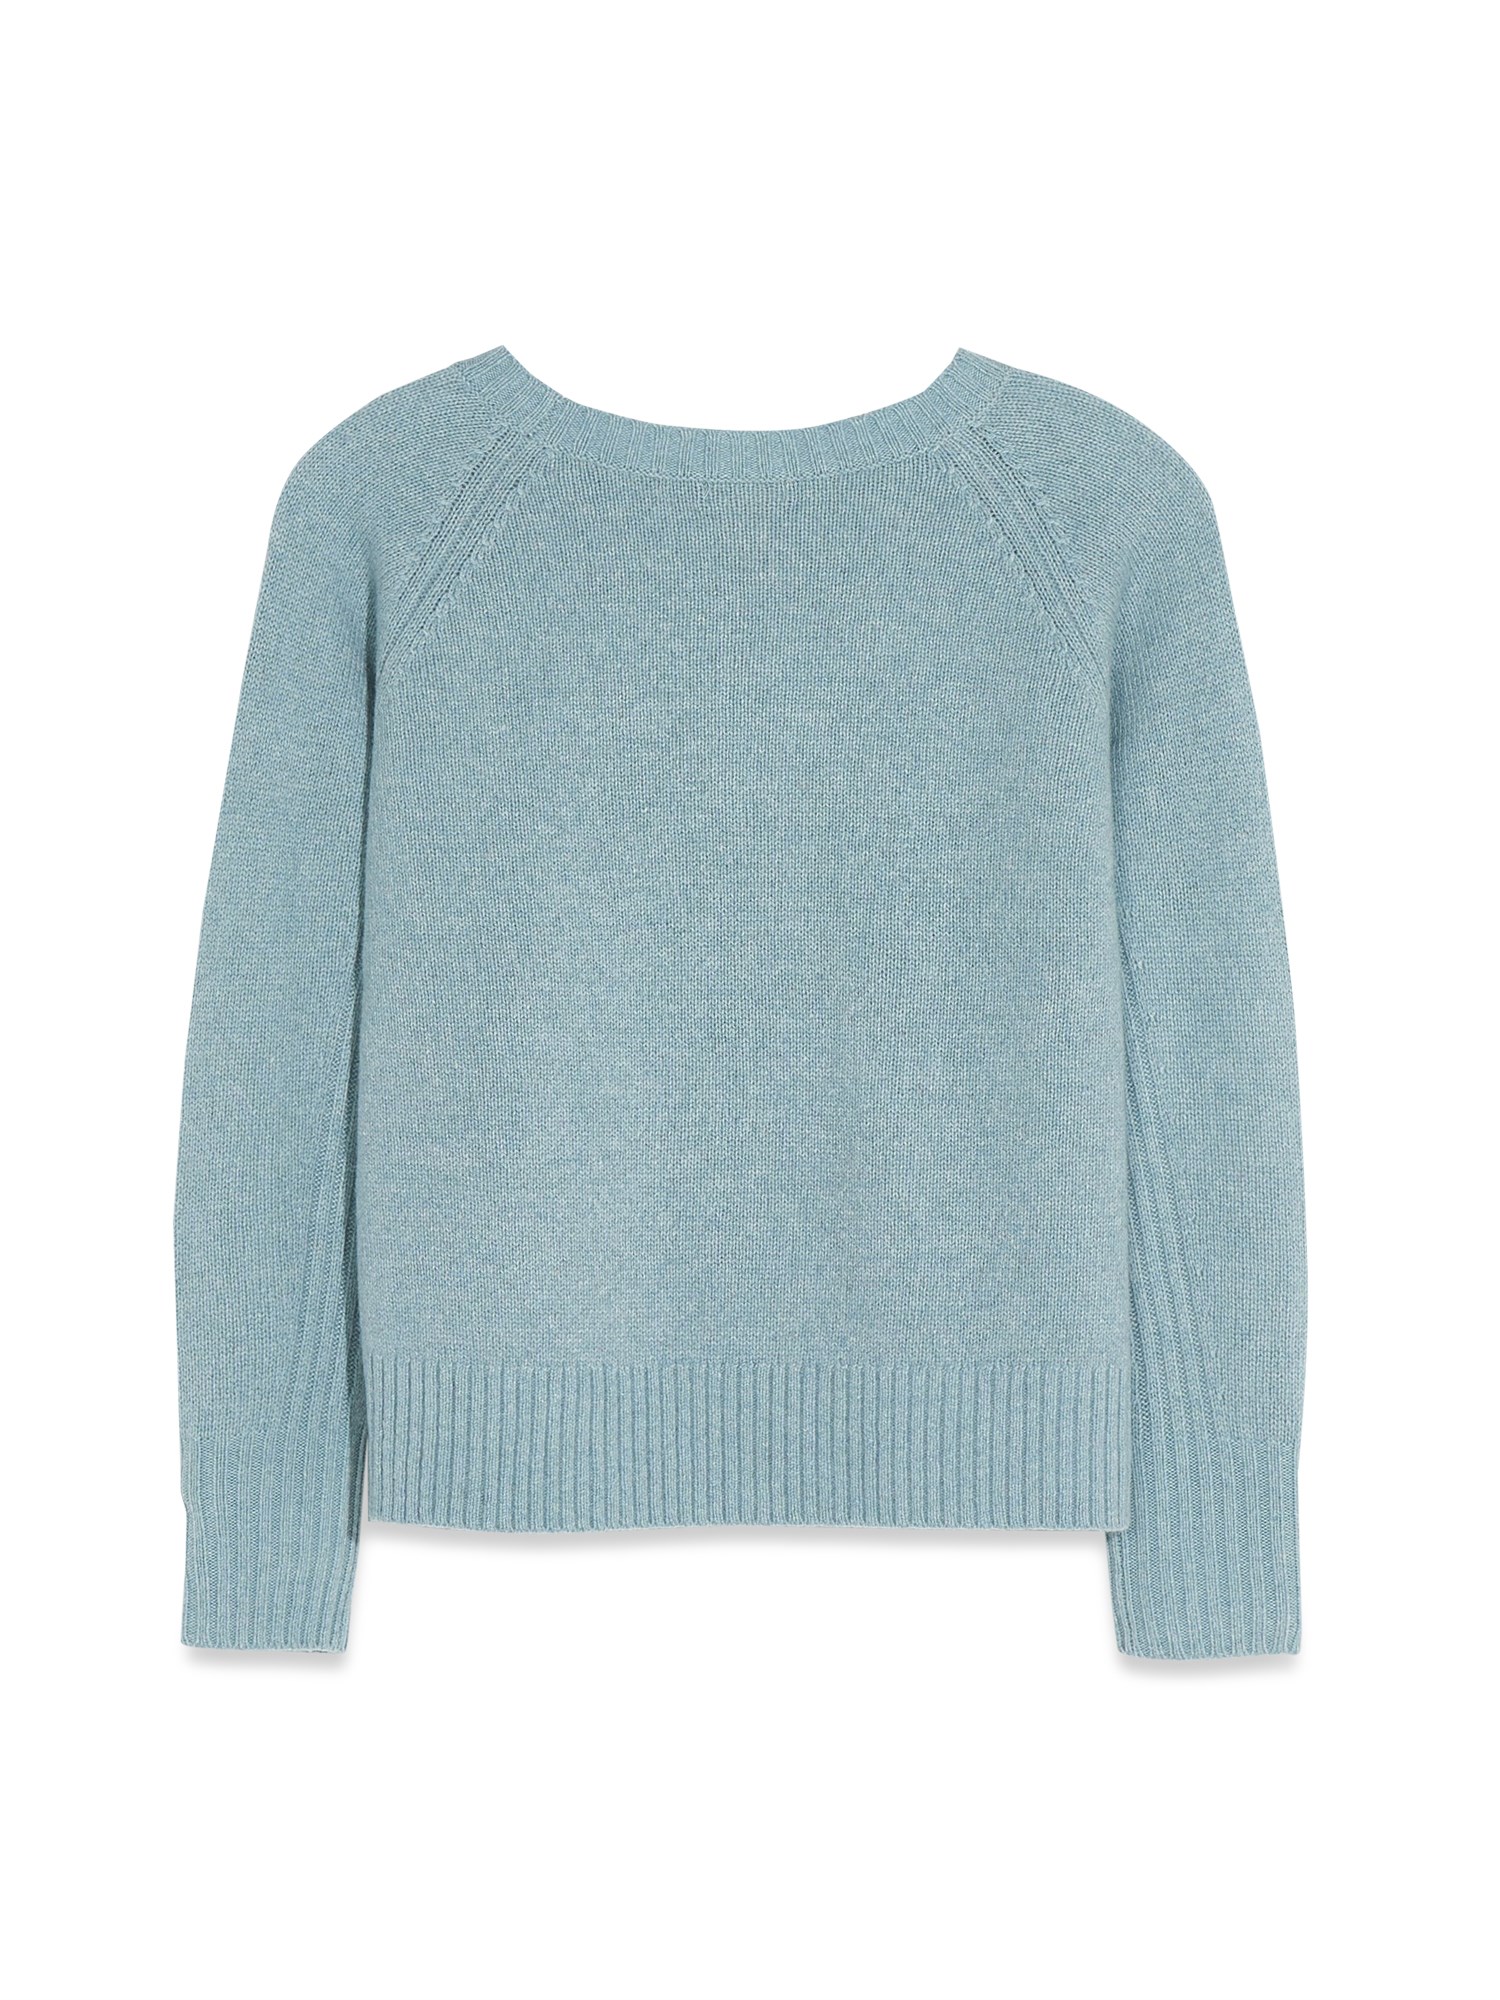 bellerose teal sweater